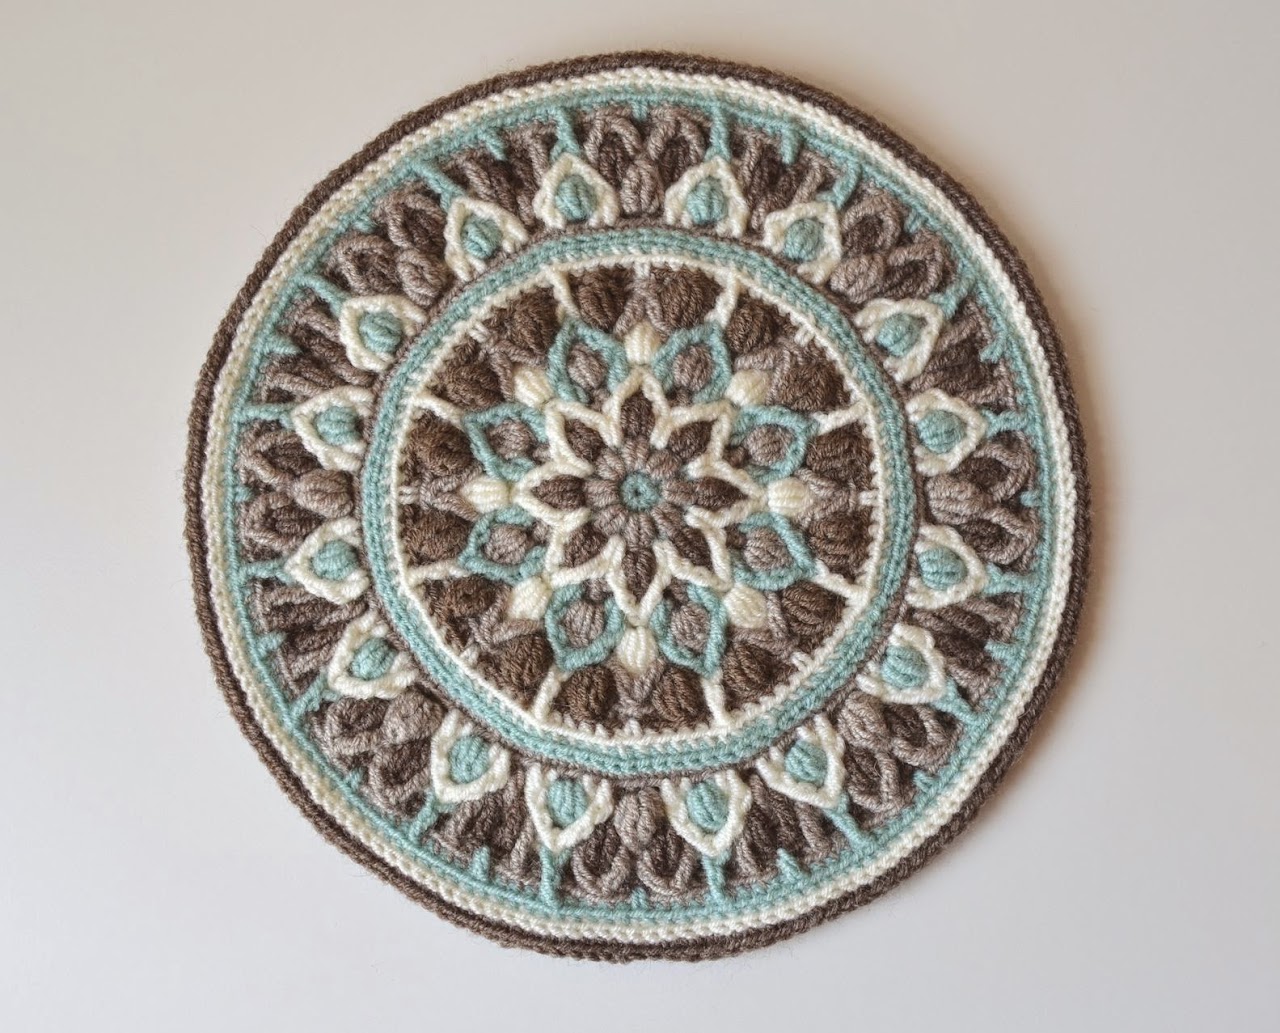 Mint Coffee Mandala potholder by Lilla Bjorn - overlay crochet